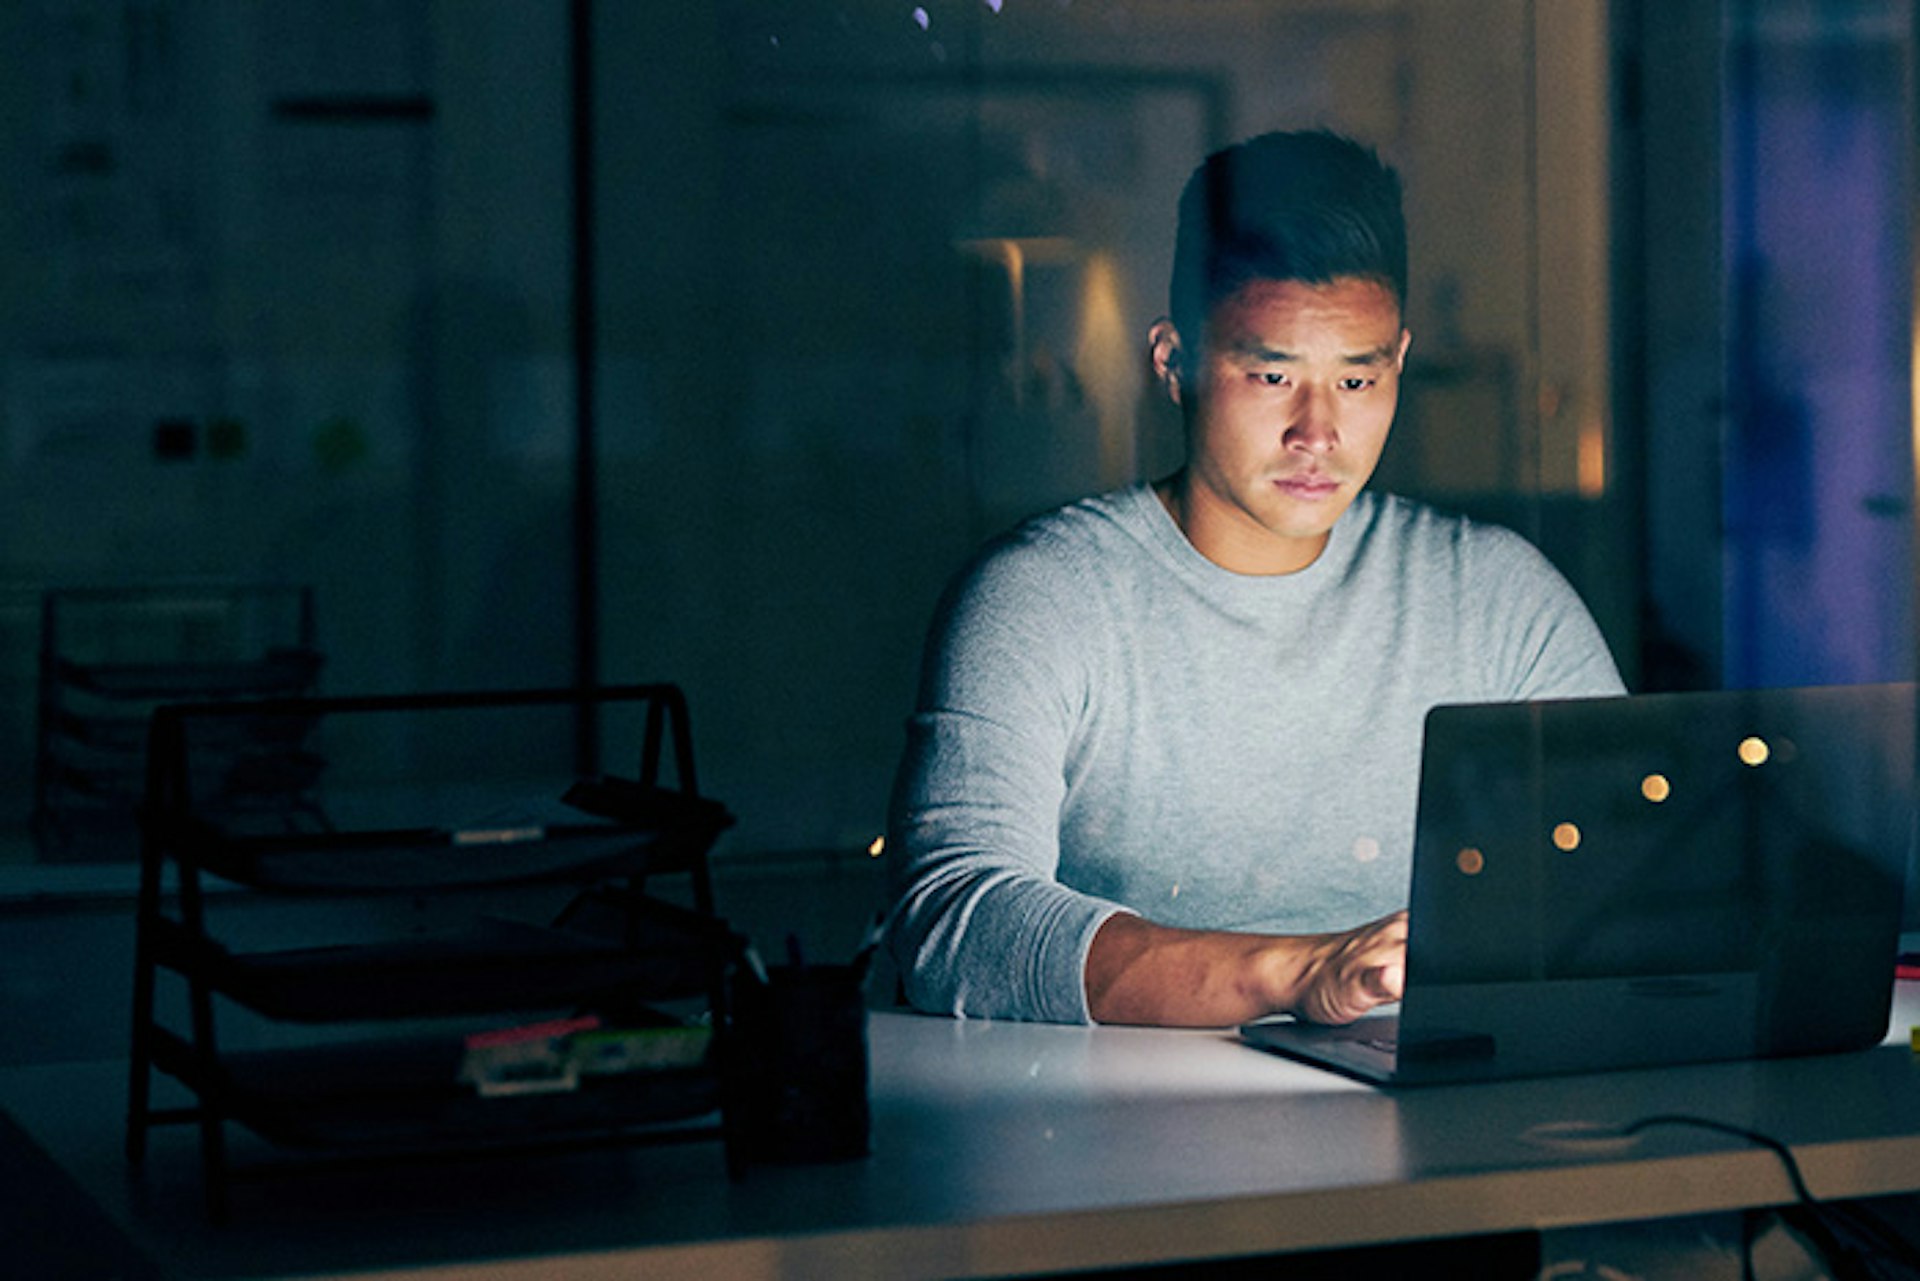 Man illuminated by laptop in a dark room